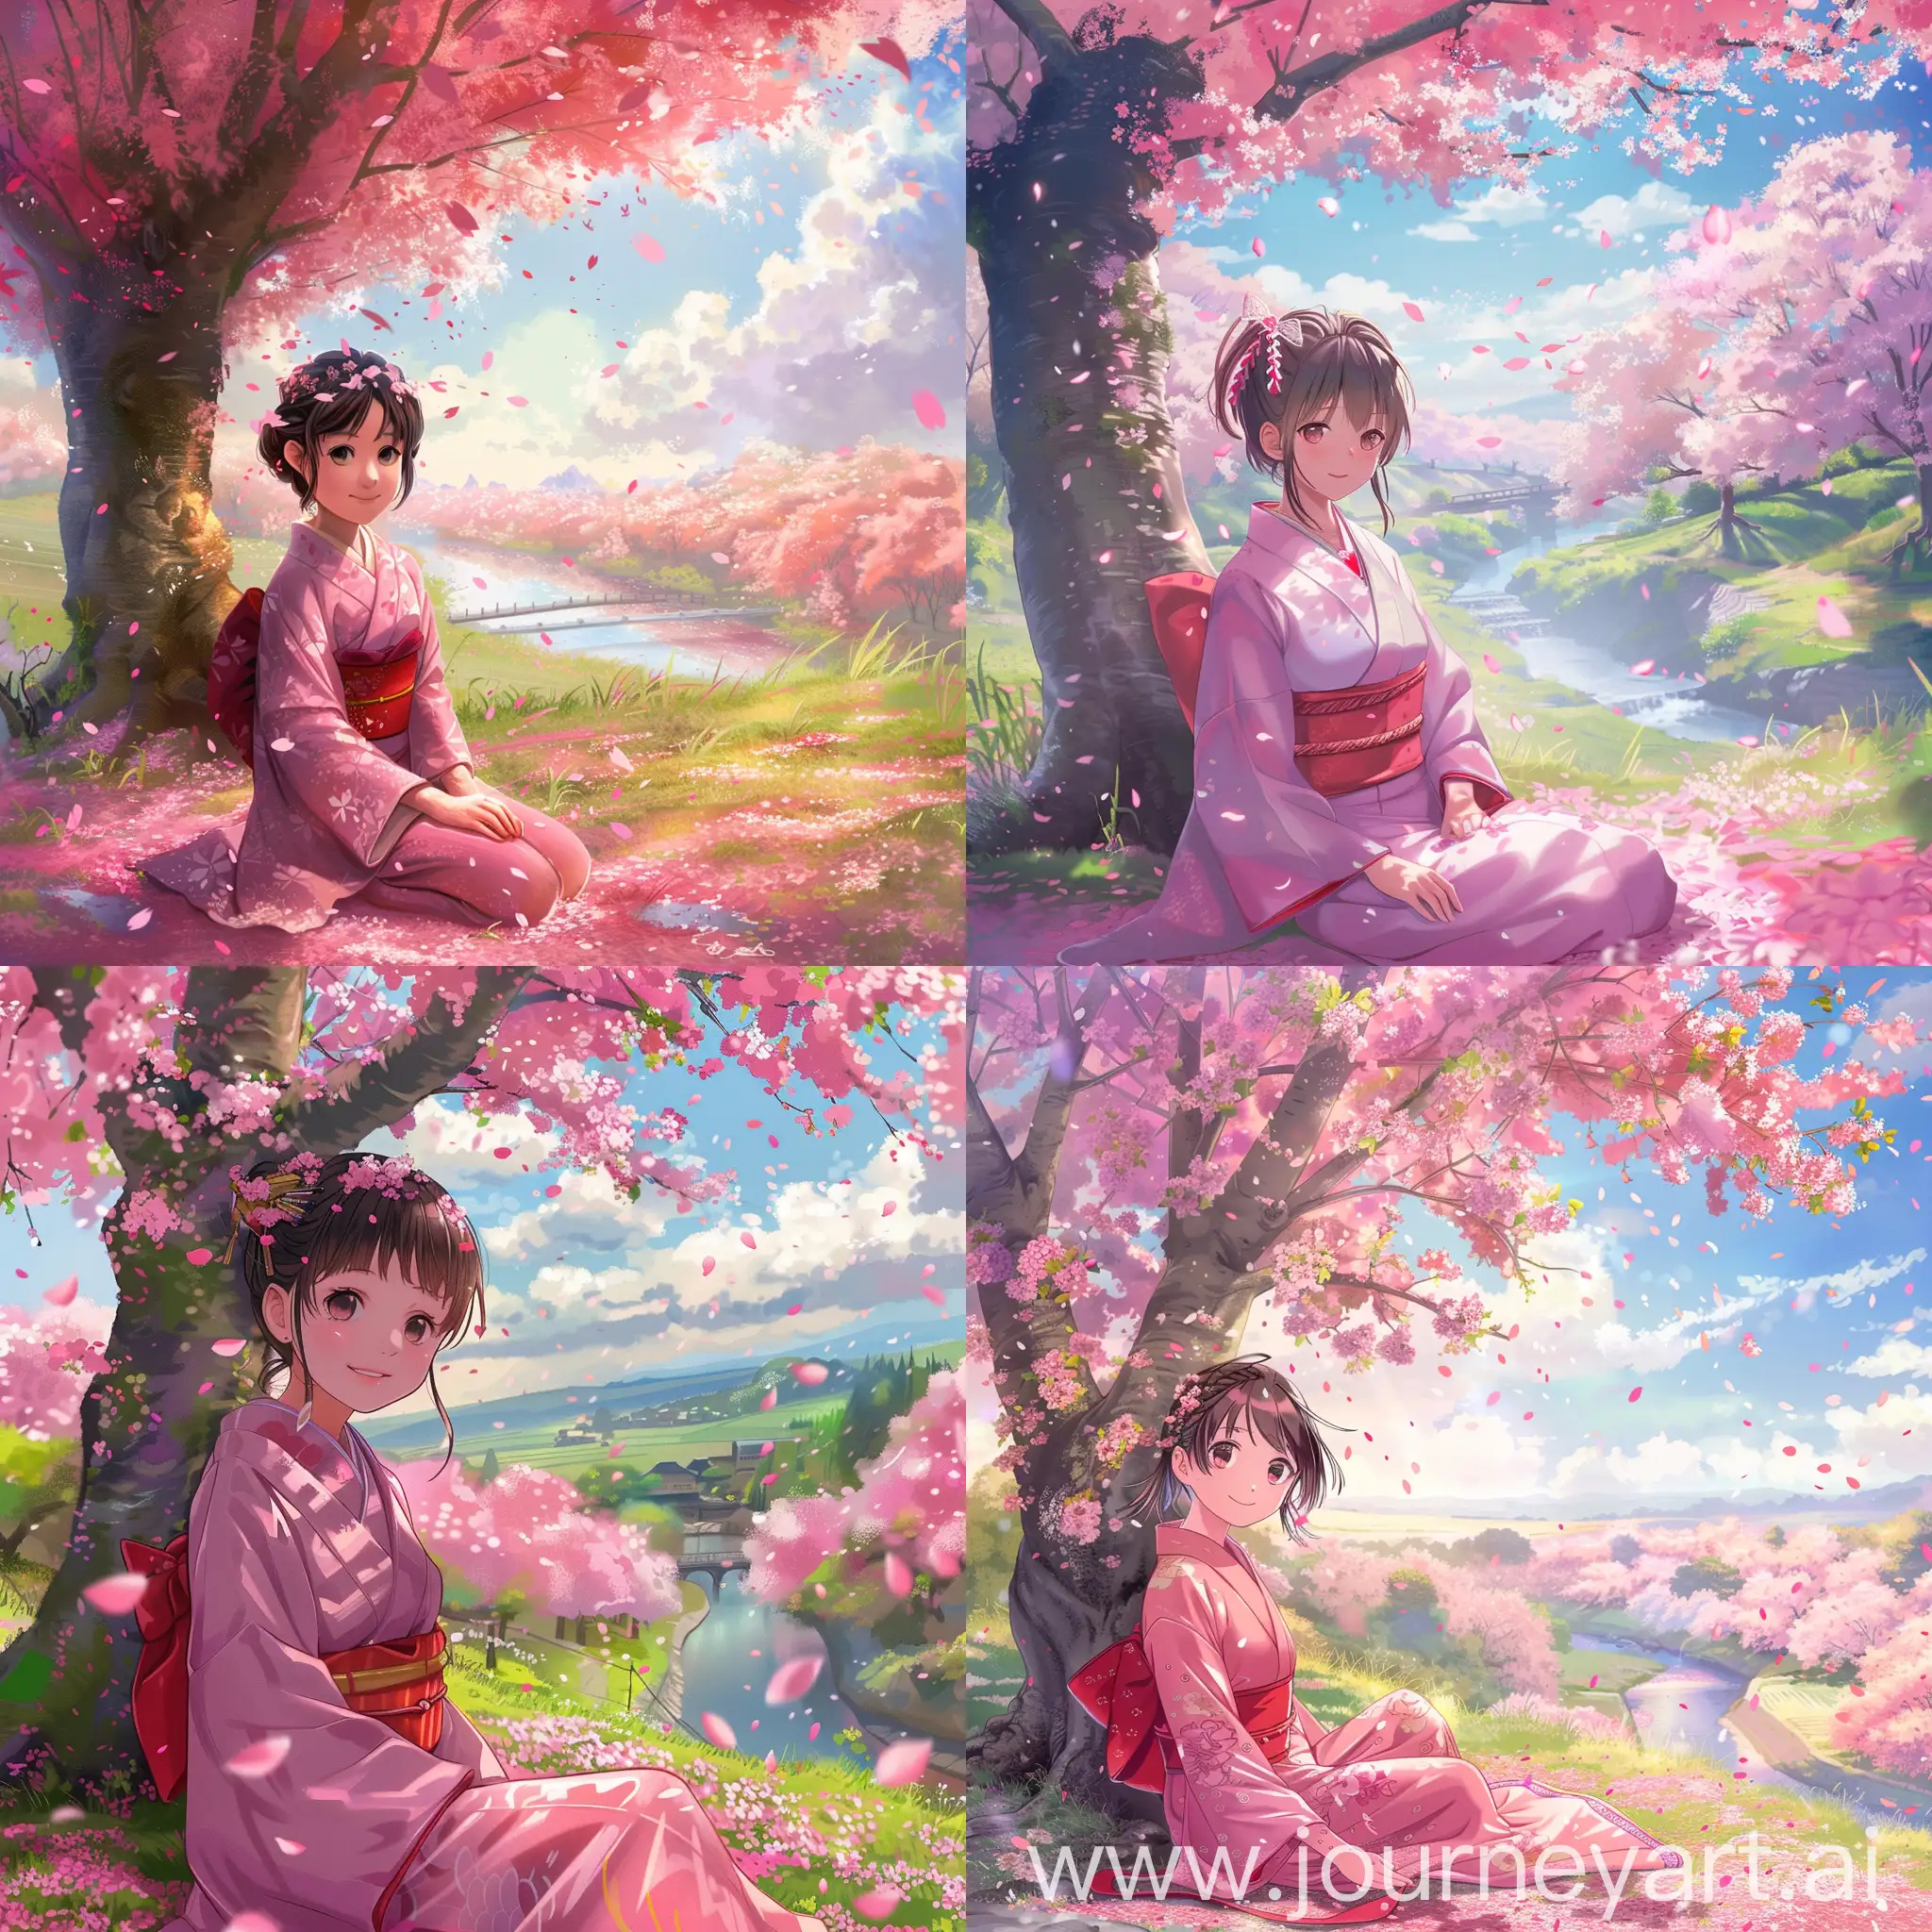 Tranquil-Beauty-Serene-Girl-in-Cherry-Blossom-Kimono